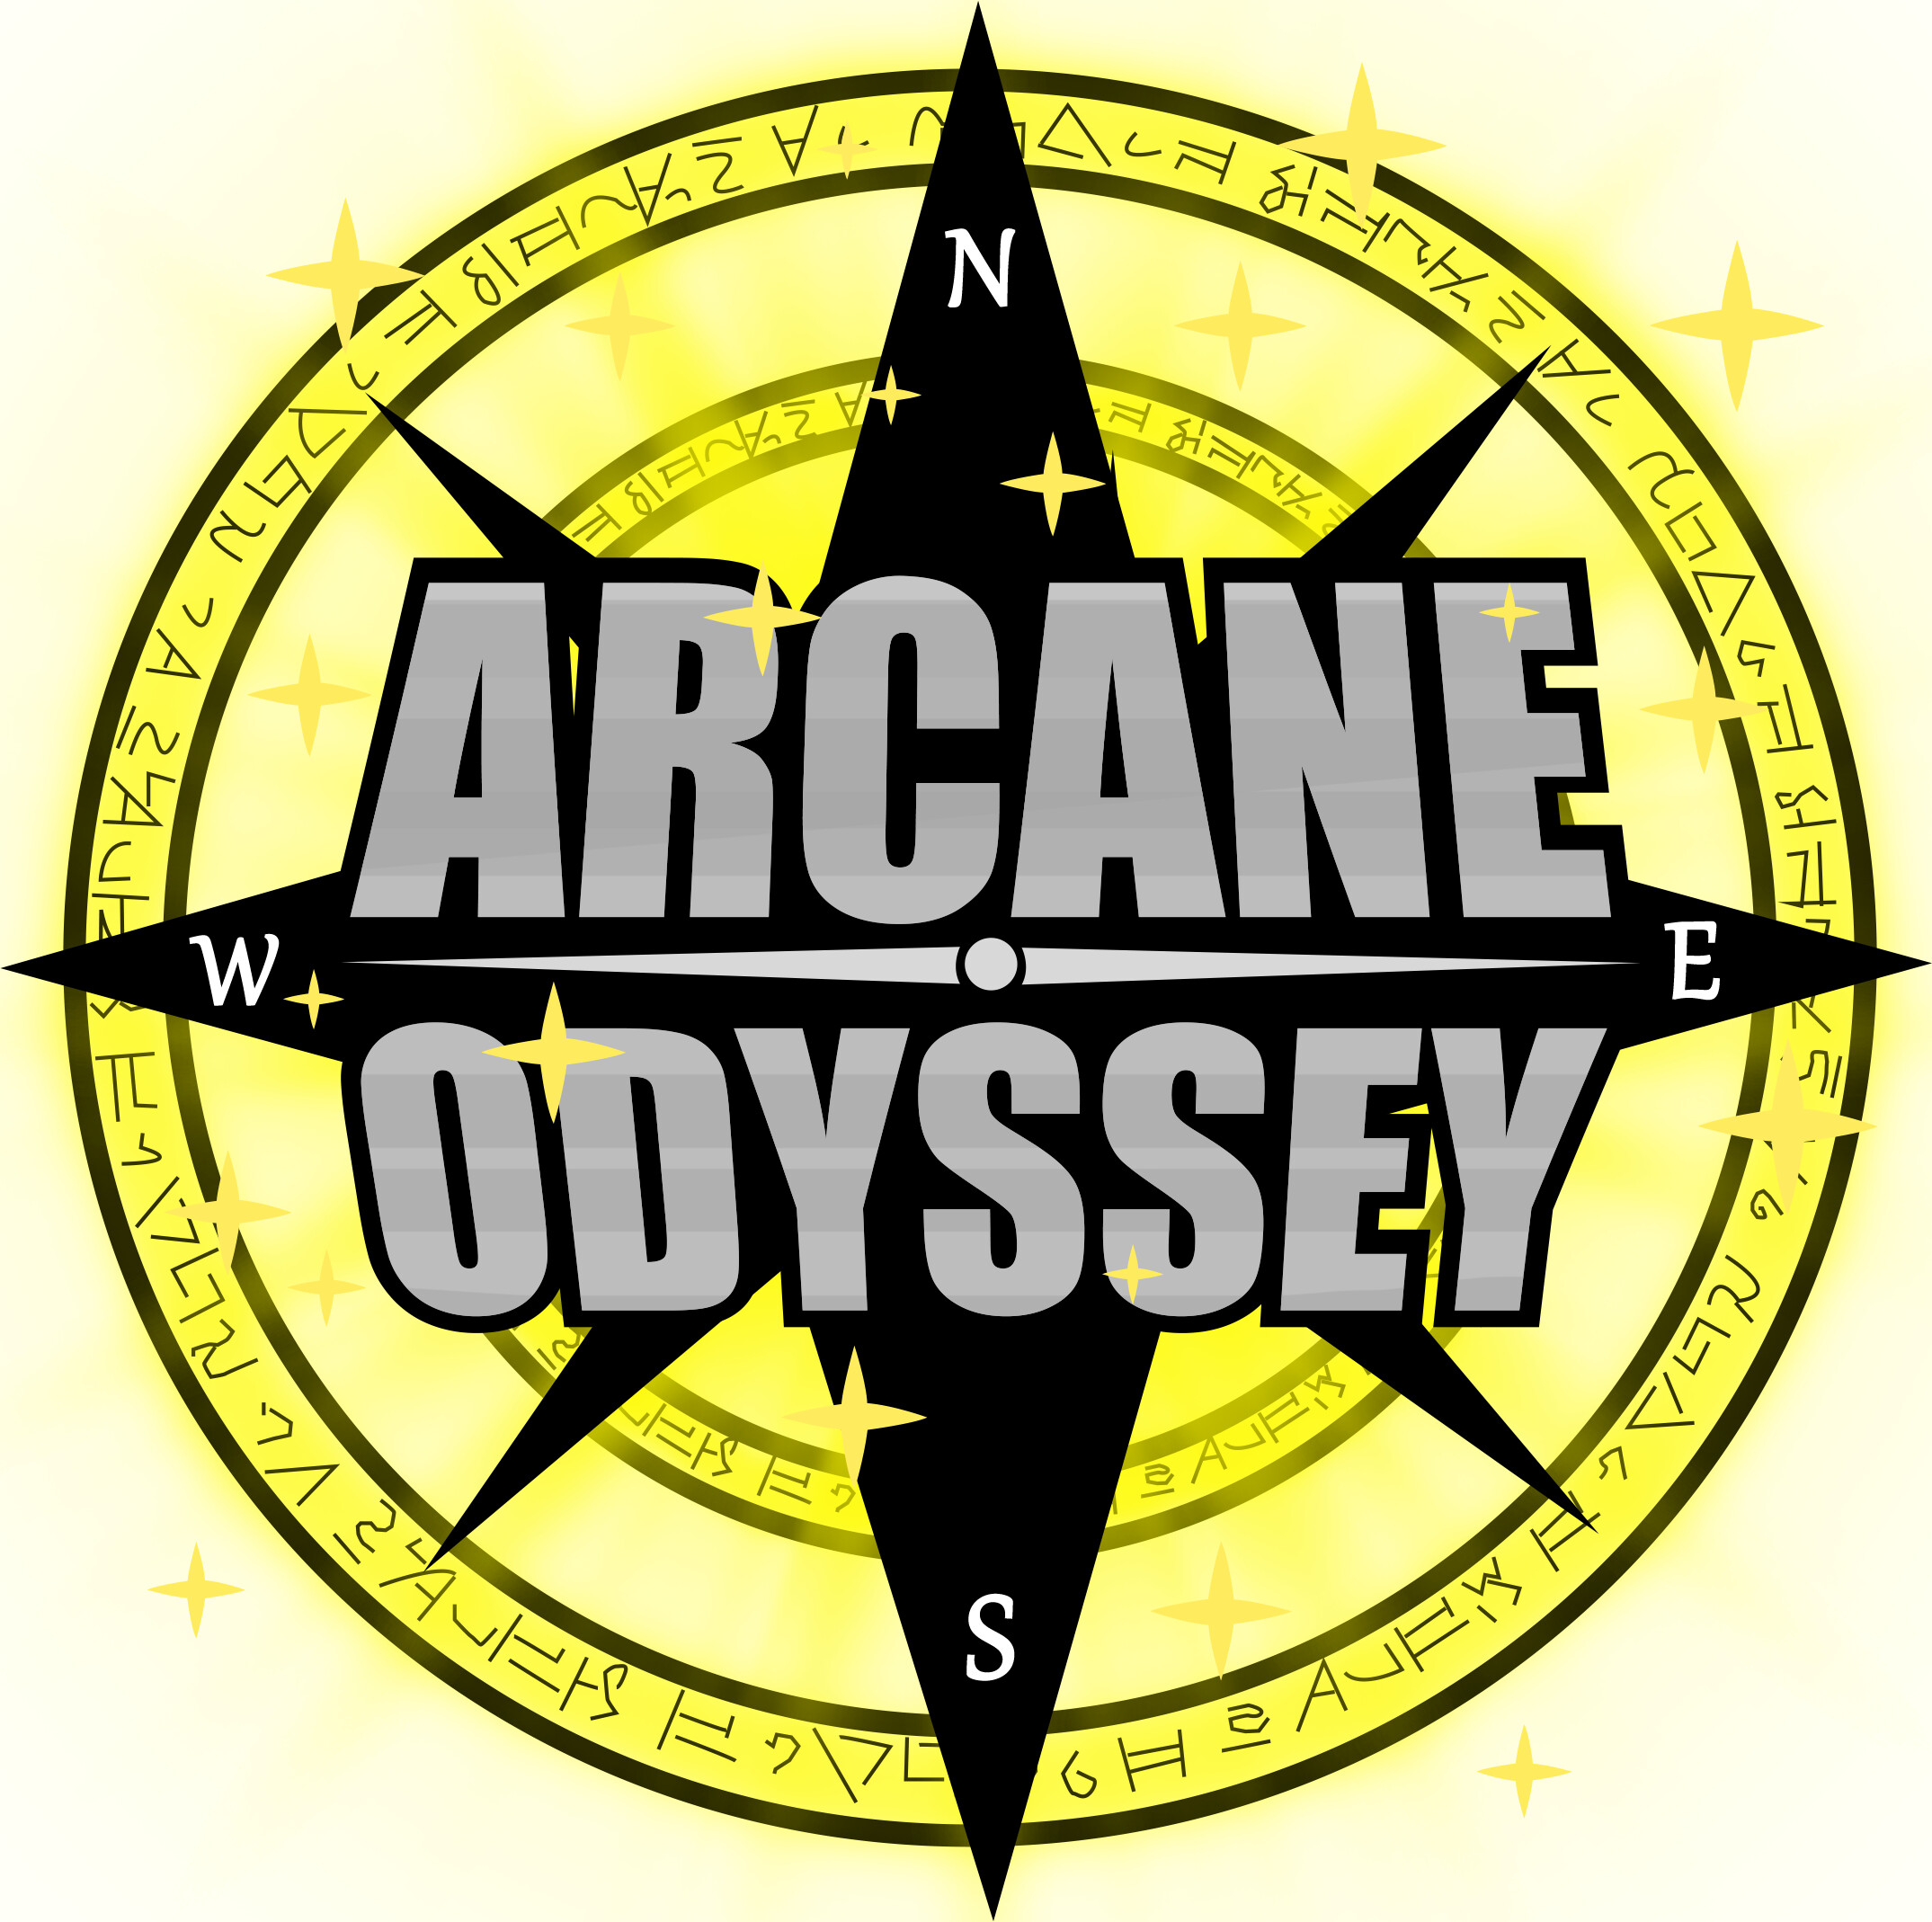 The Arcane Odyssey Logo design concept art - Art - Arcane Odyssey